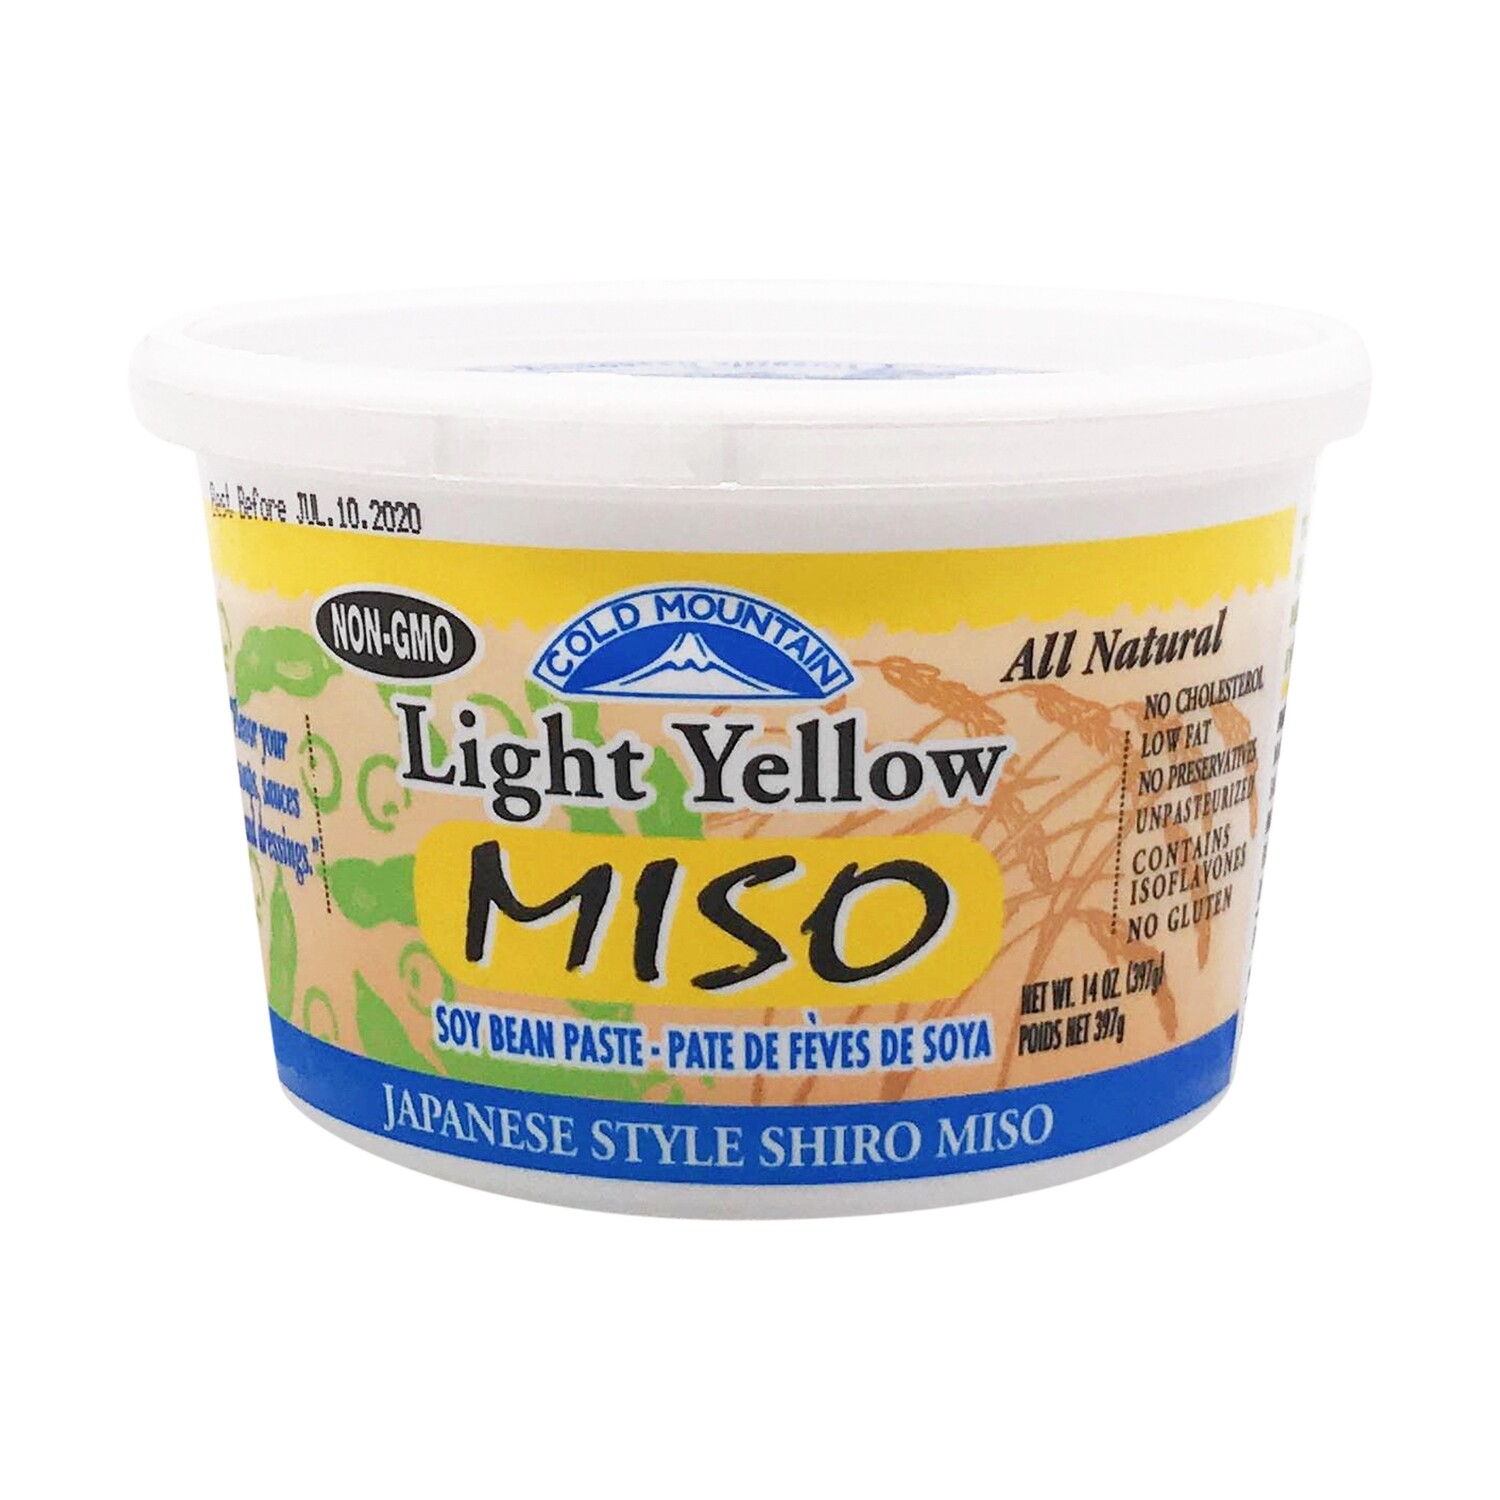 Grocery / International / Cold Mountain Light Yellow Miso, 14 oz